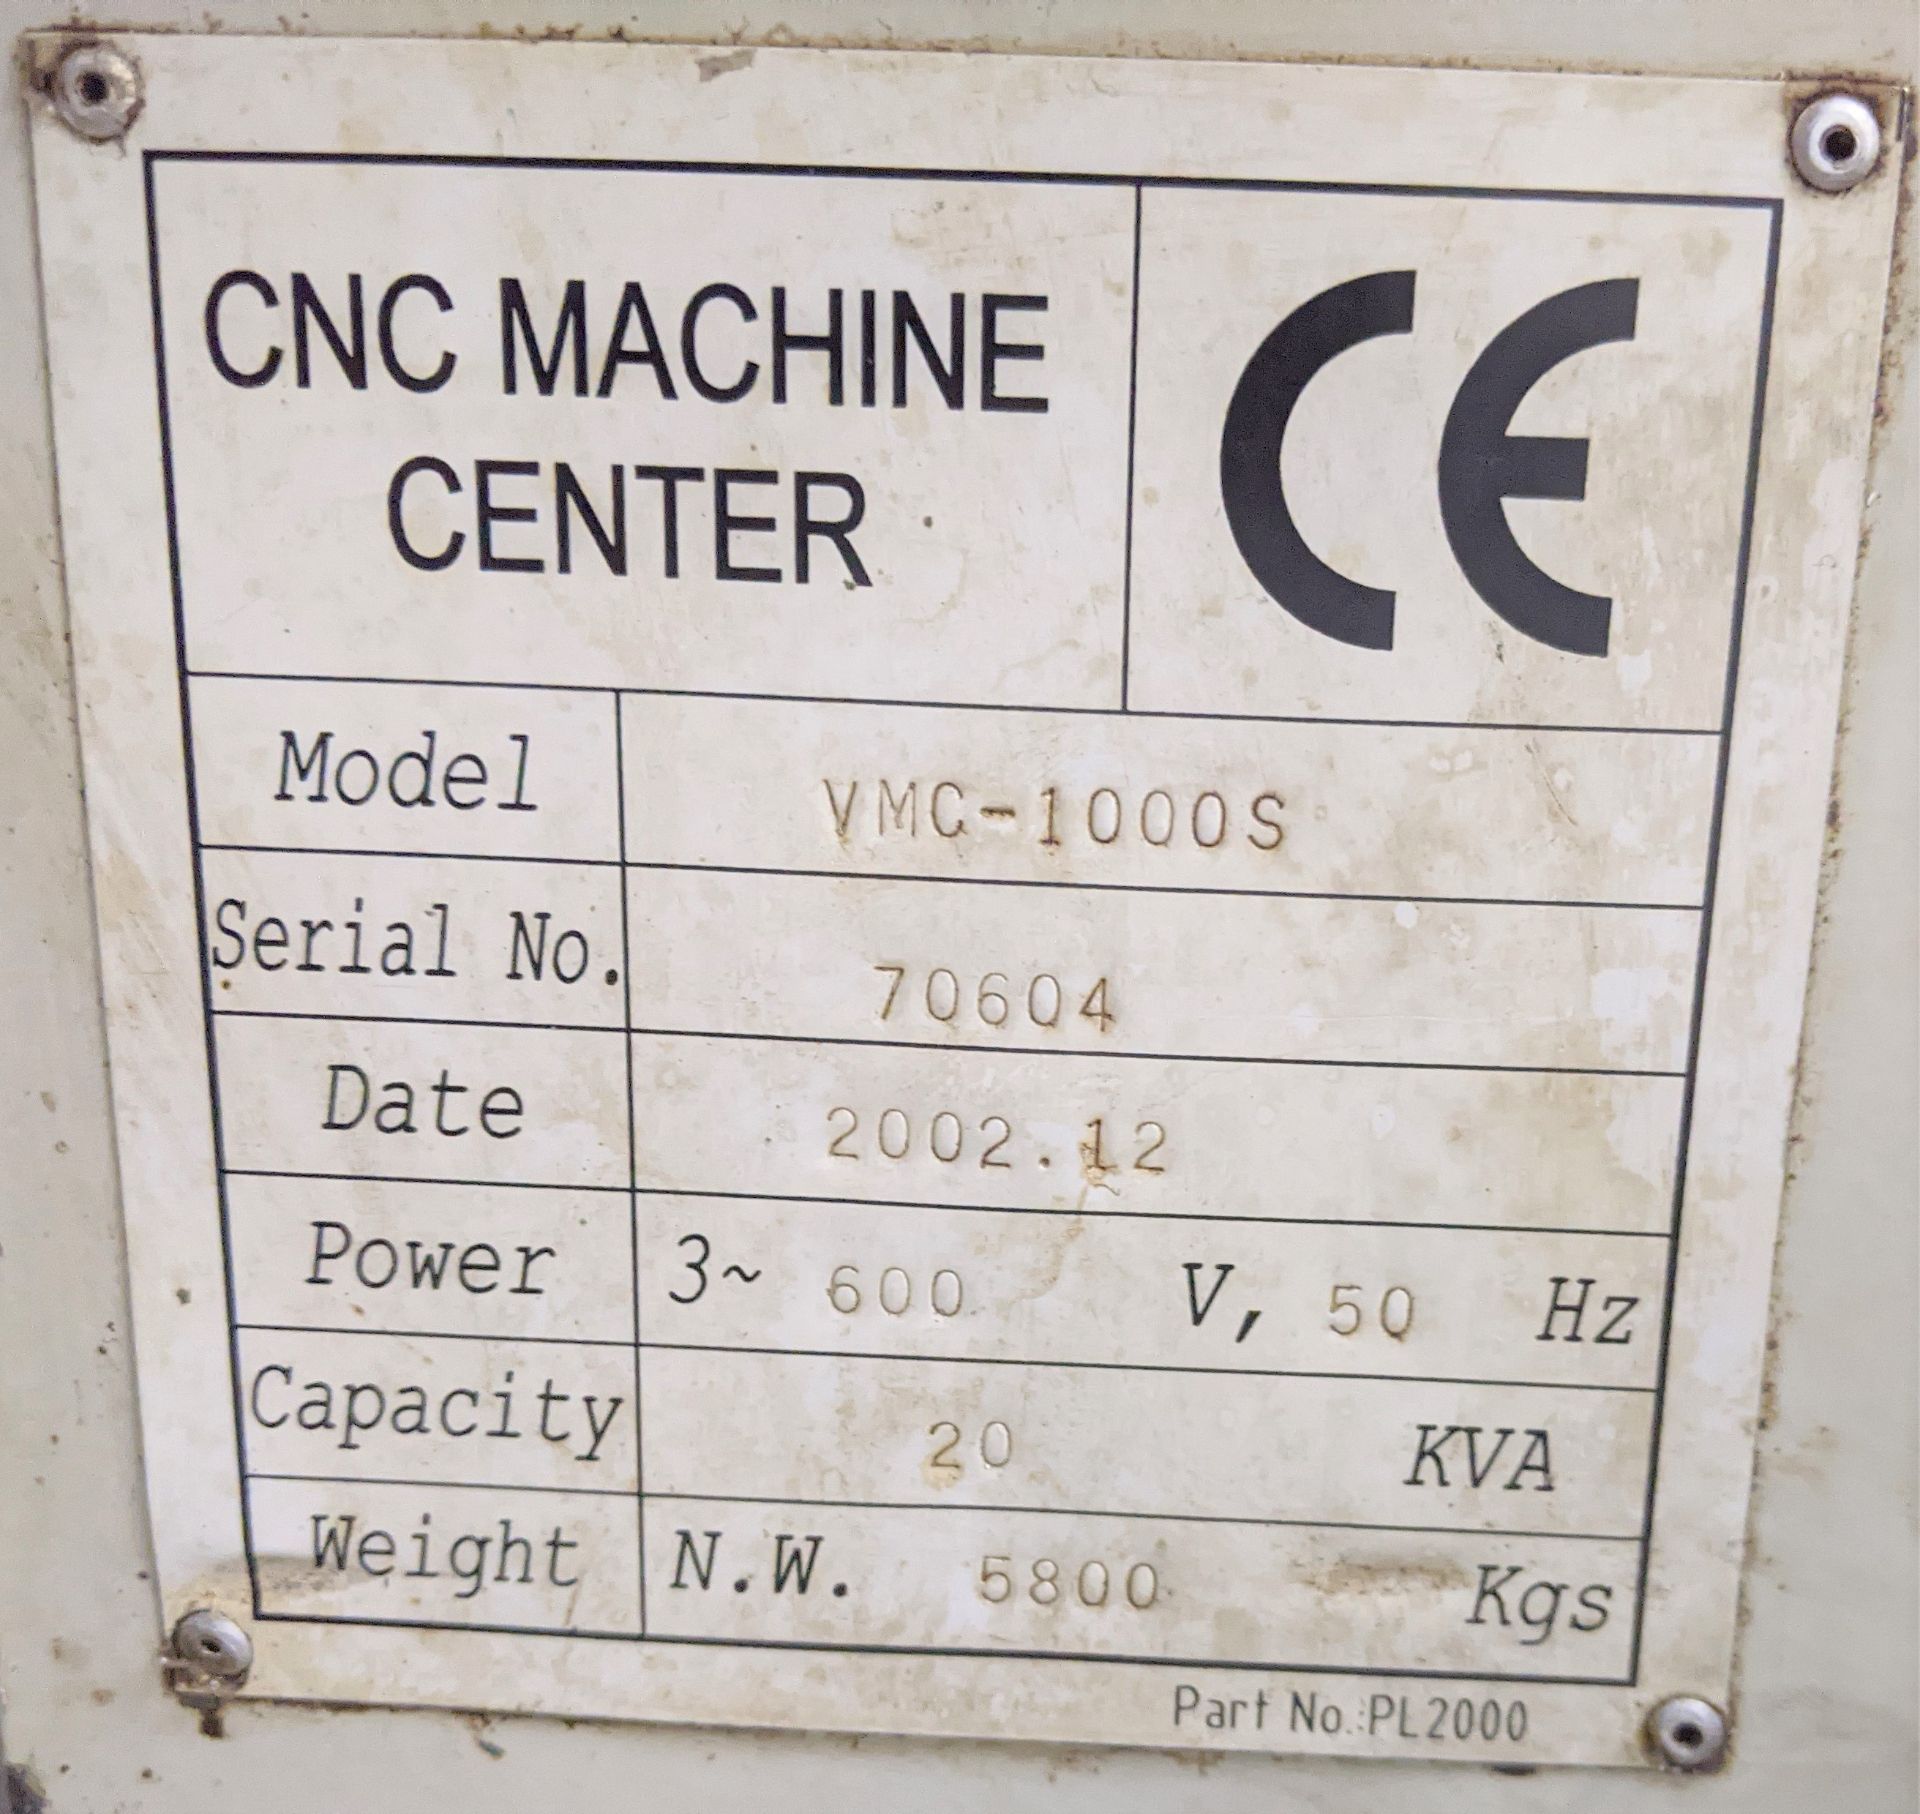 2002 PINNACLE VECTOR VMC-1000S CNC VERTICAL MACHINING CENTER, FANUC SERIES O-MD CNC CONTROL, 47” X - Image 18 of 18